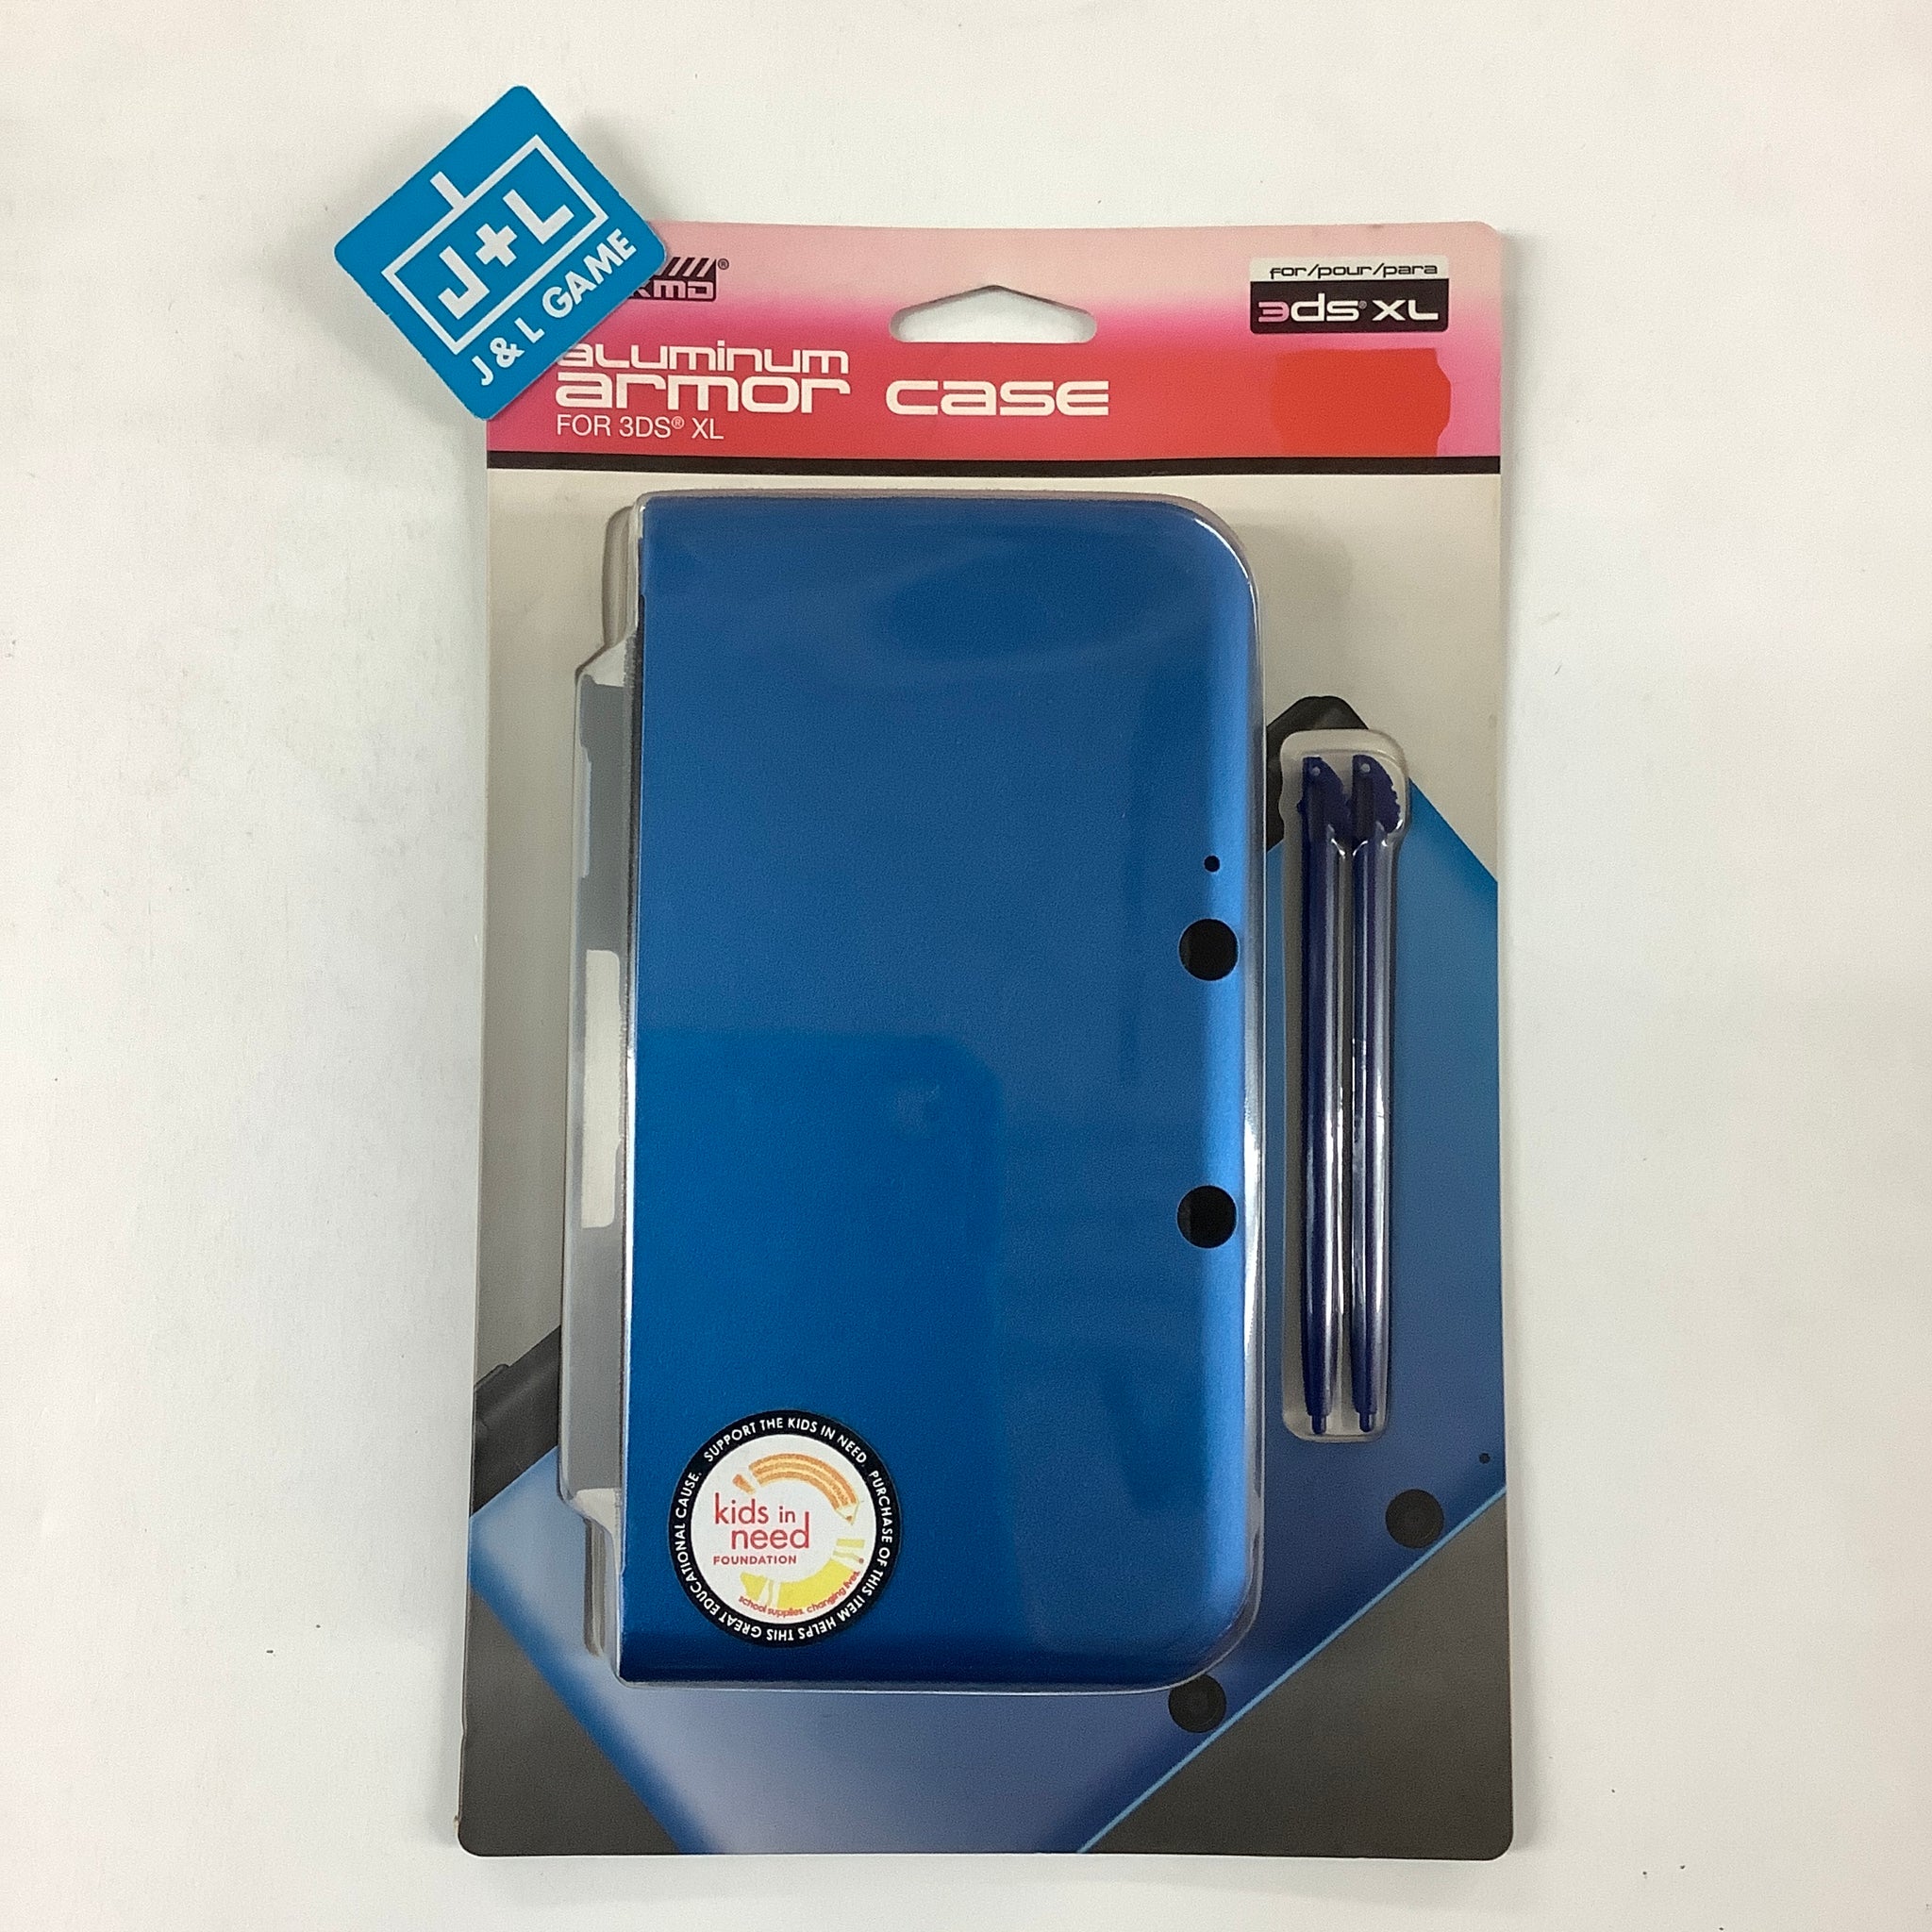 KMD Aluminum Armor Case for 3DS XL (Blue) - Nintendo 3DS ACCESSORIES KMD   